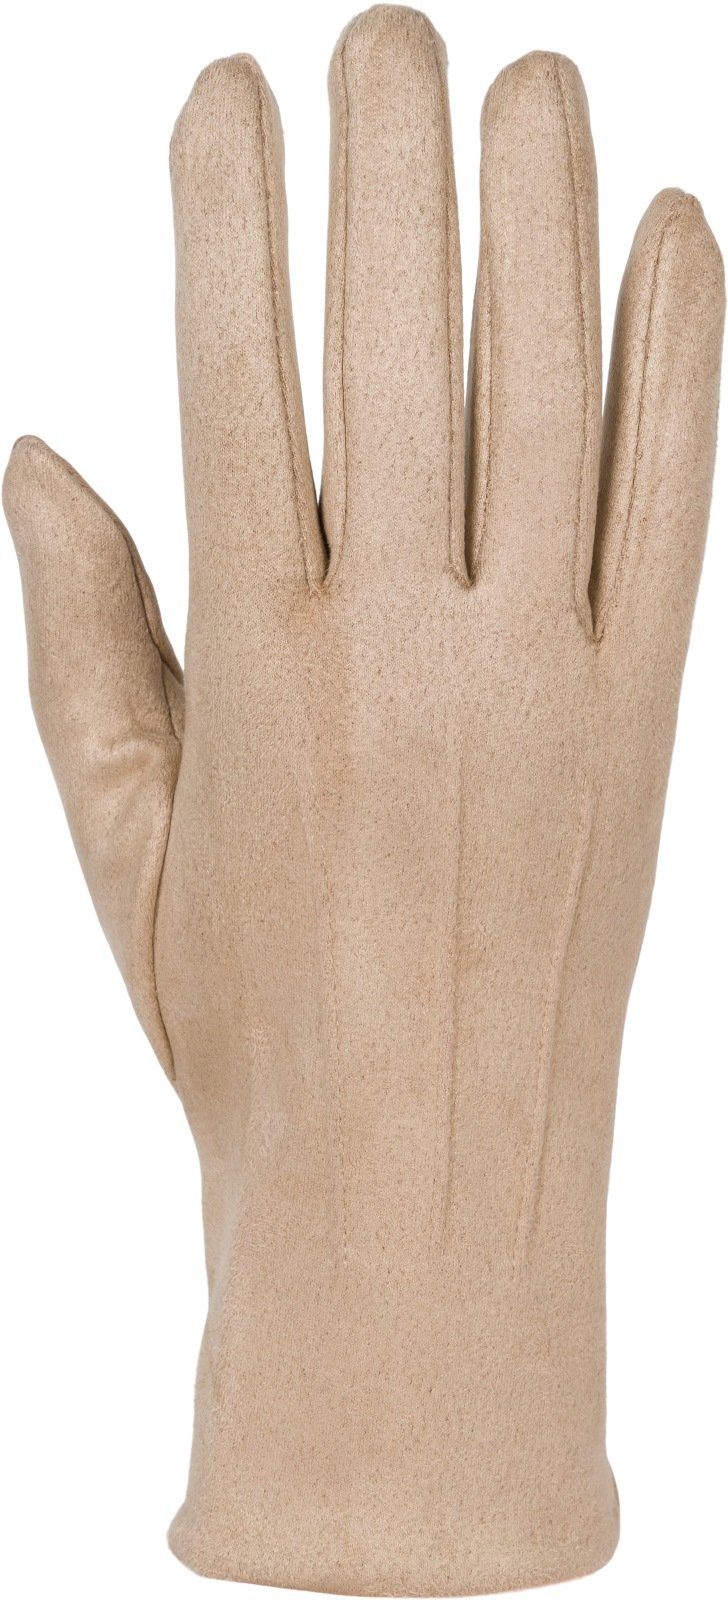 styleBREAKER Fleecehandschuhe Beige Handschuhe Touchscreen Ziernähte Einfarbige